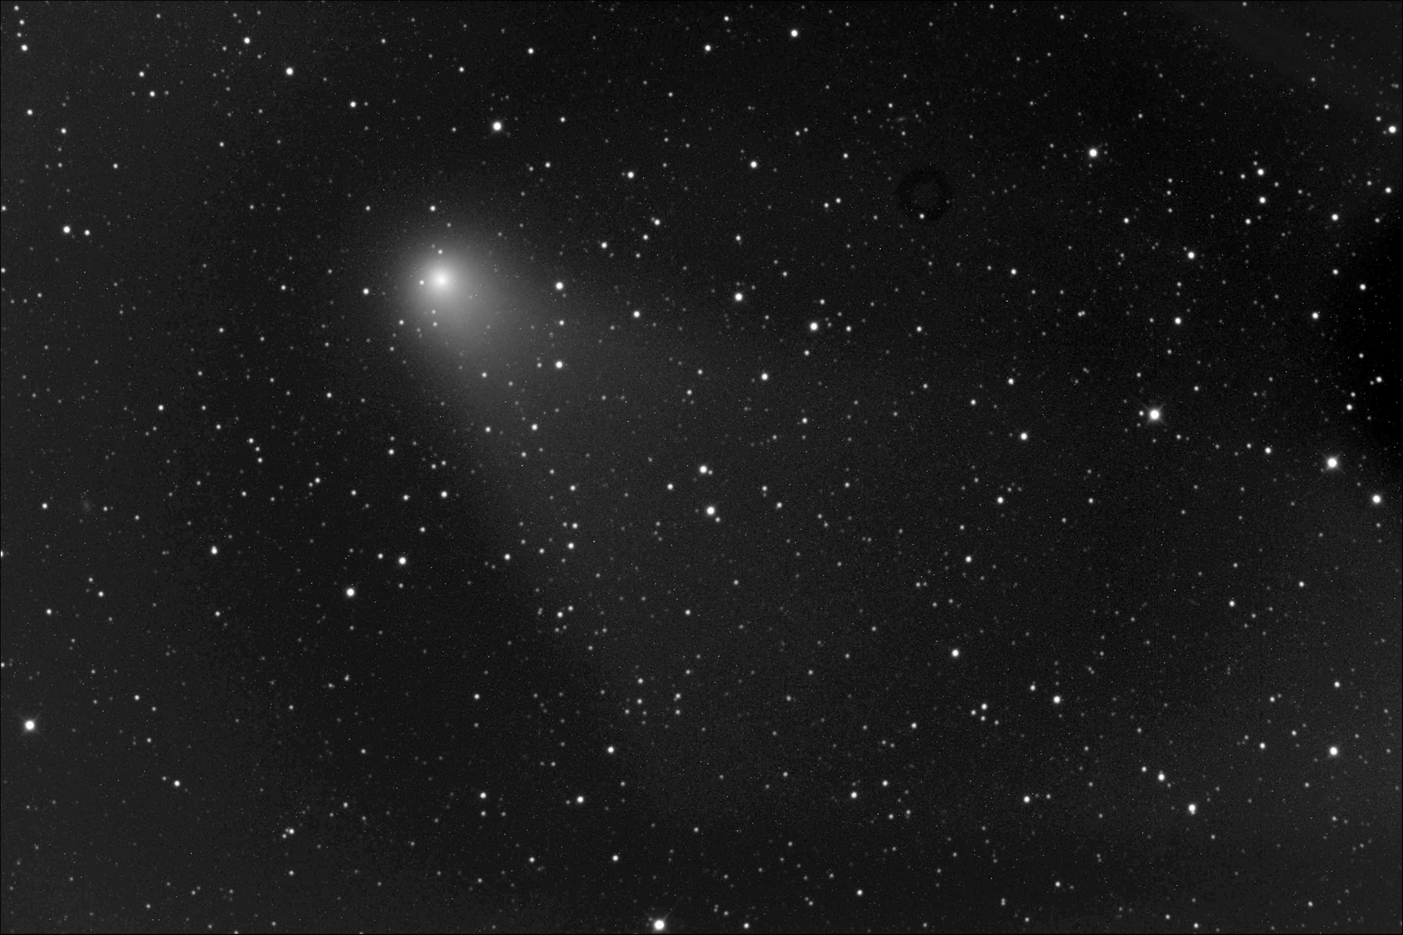 Sm_Dust_CometGarradd_2011-11-01_SingleFrame-JPEG.jpg